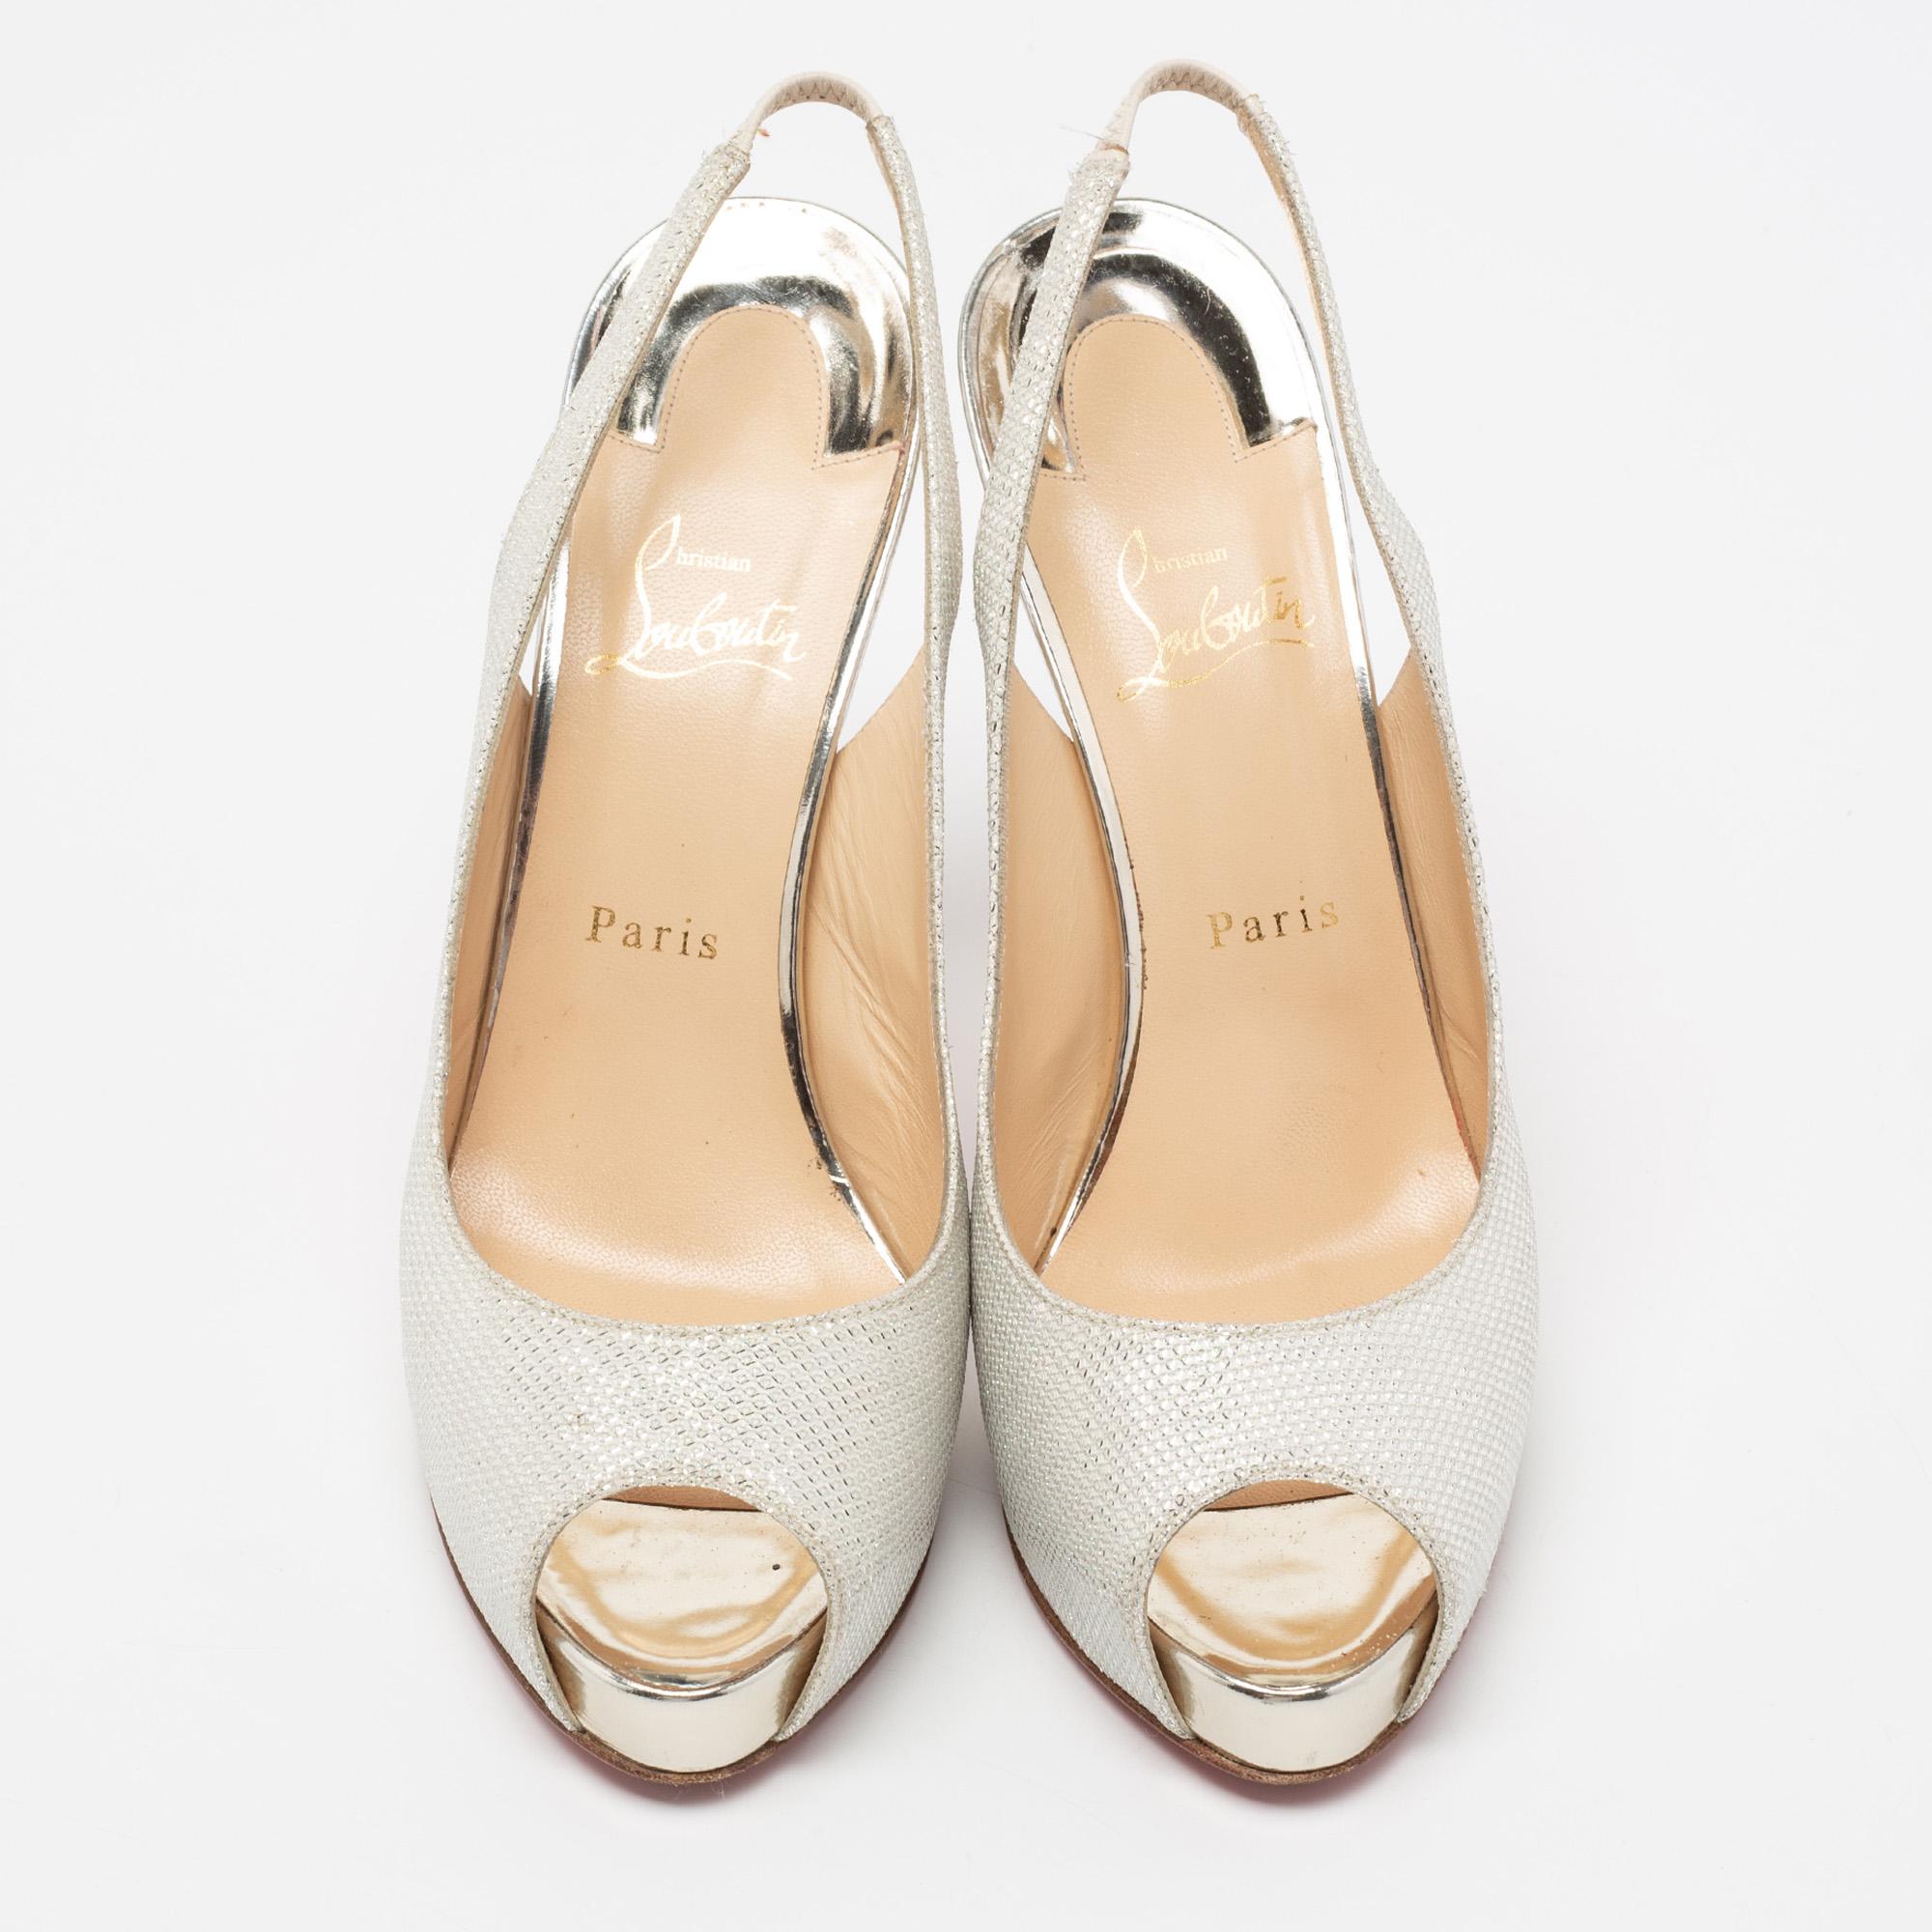 Women's Christian Louboutin White Glitter Very Prive Sandals Size 41